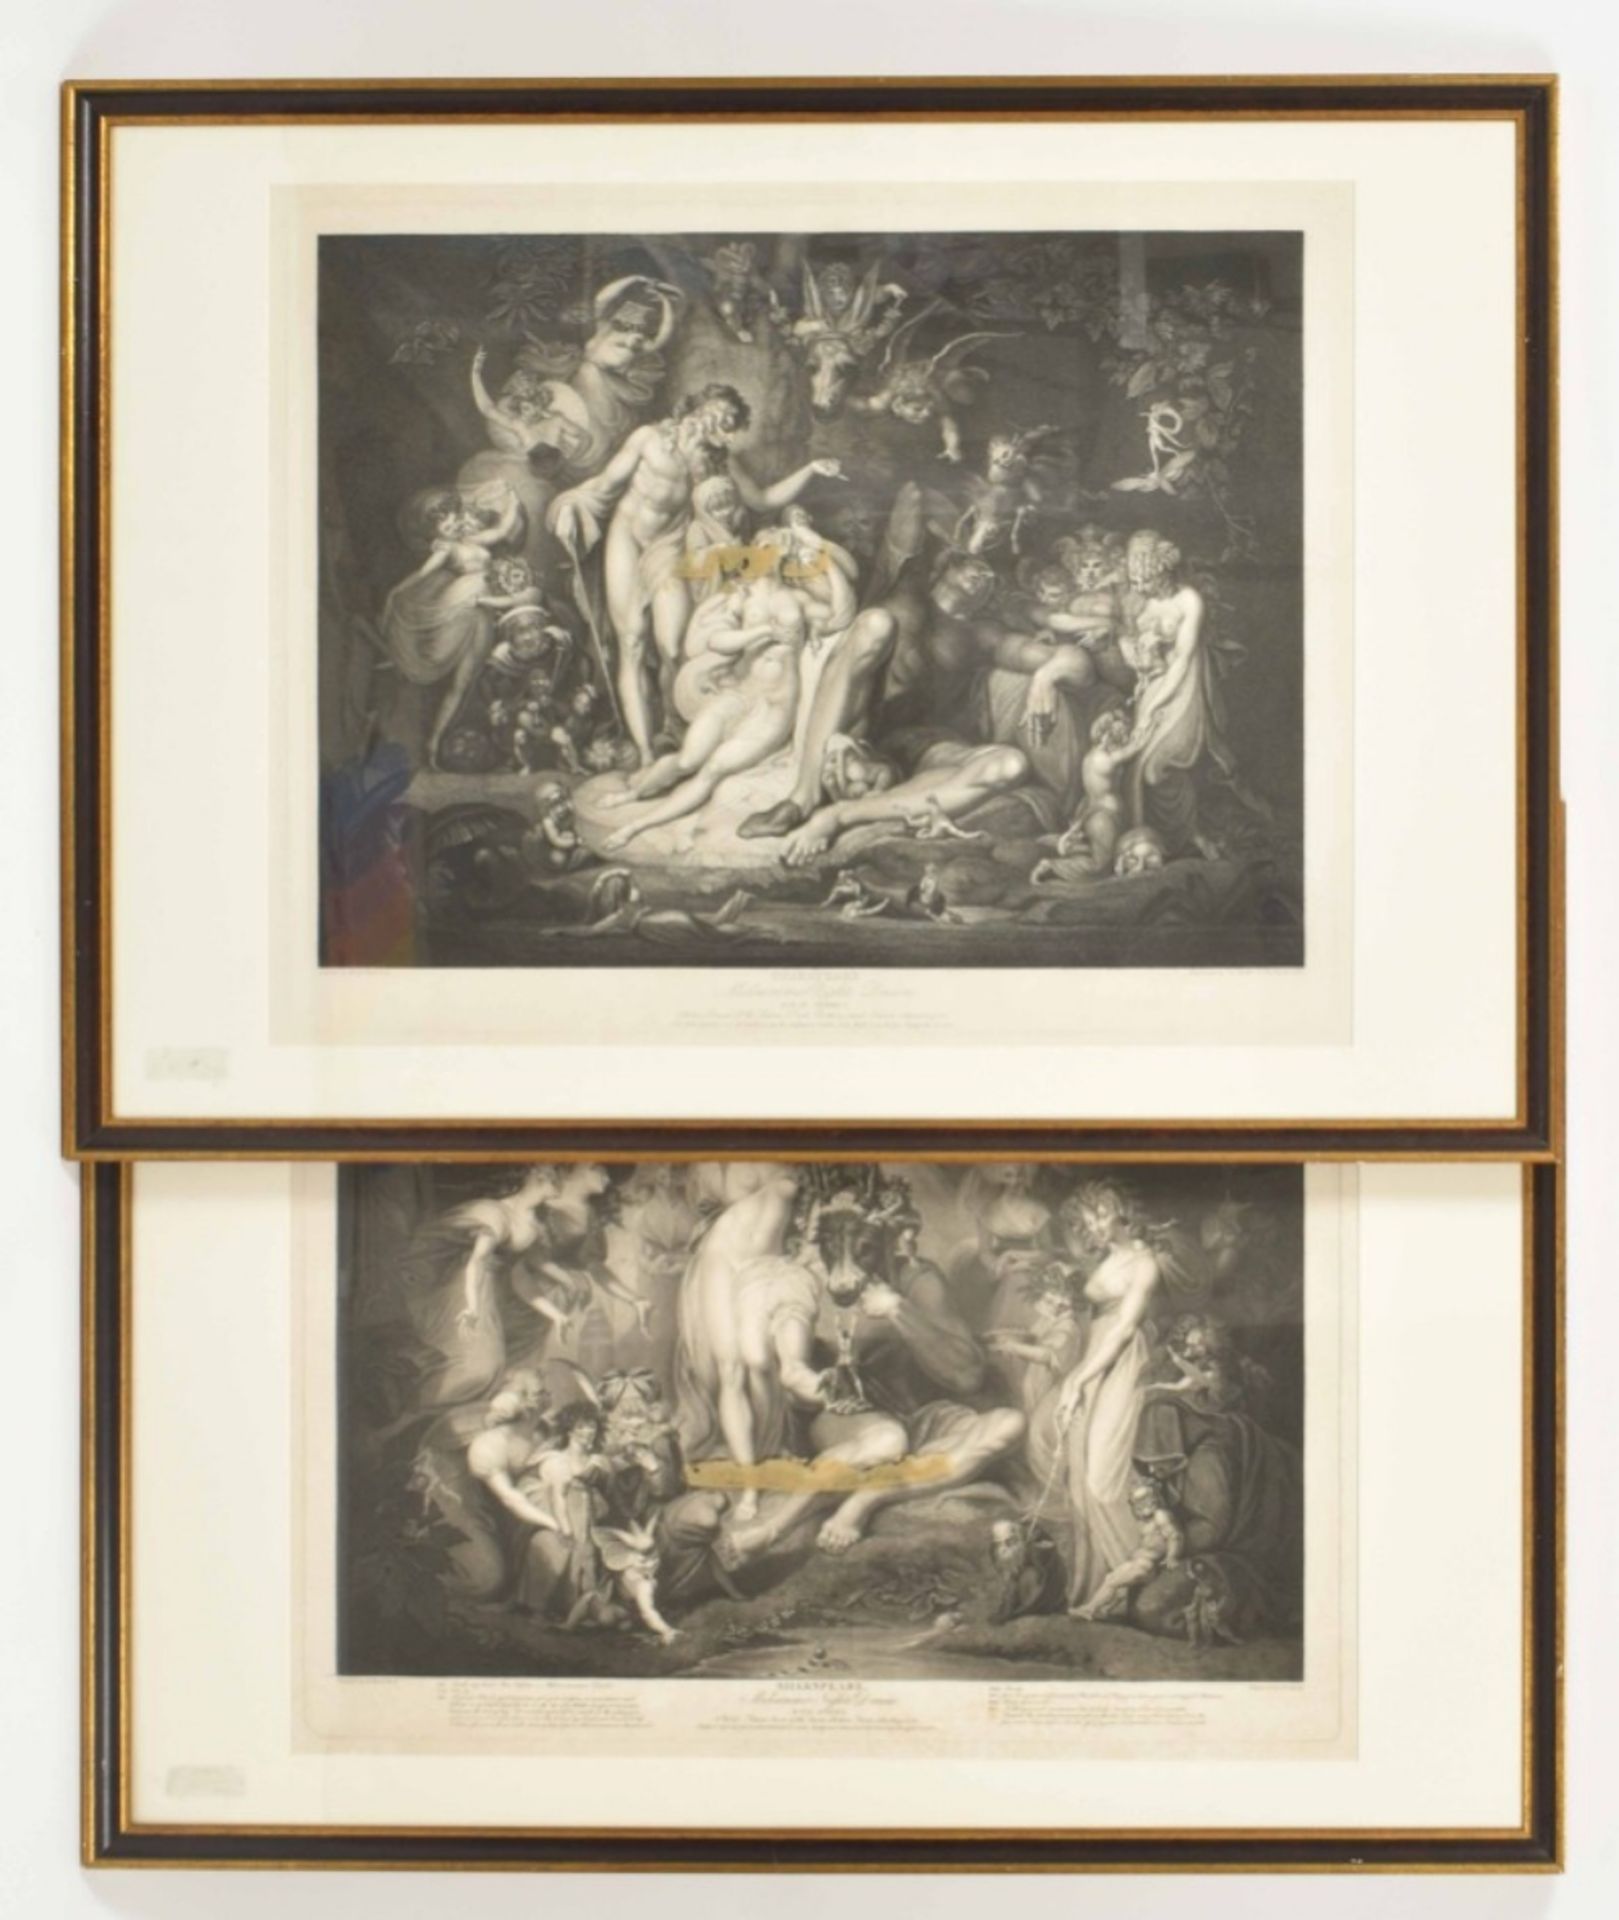 J.P. Simon after Henry Fuseli (1741-1825). Midsummer's Nights Dream